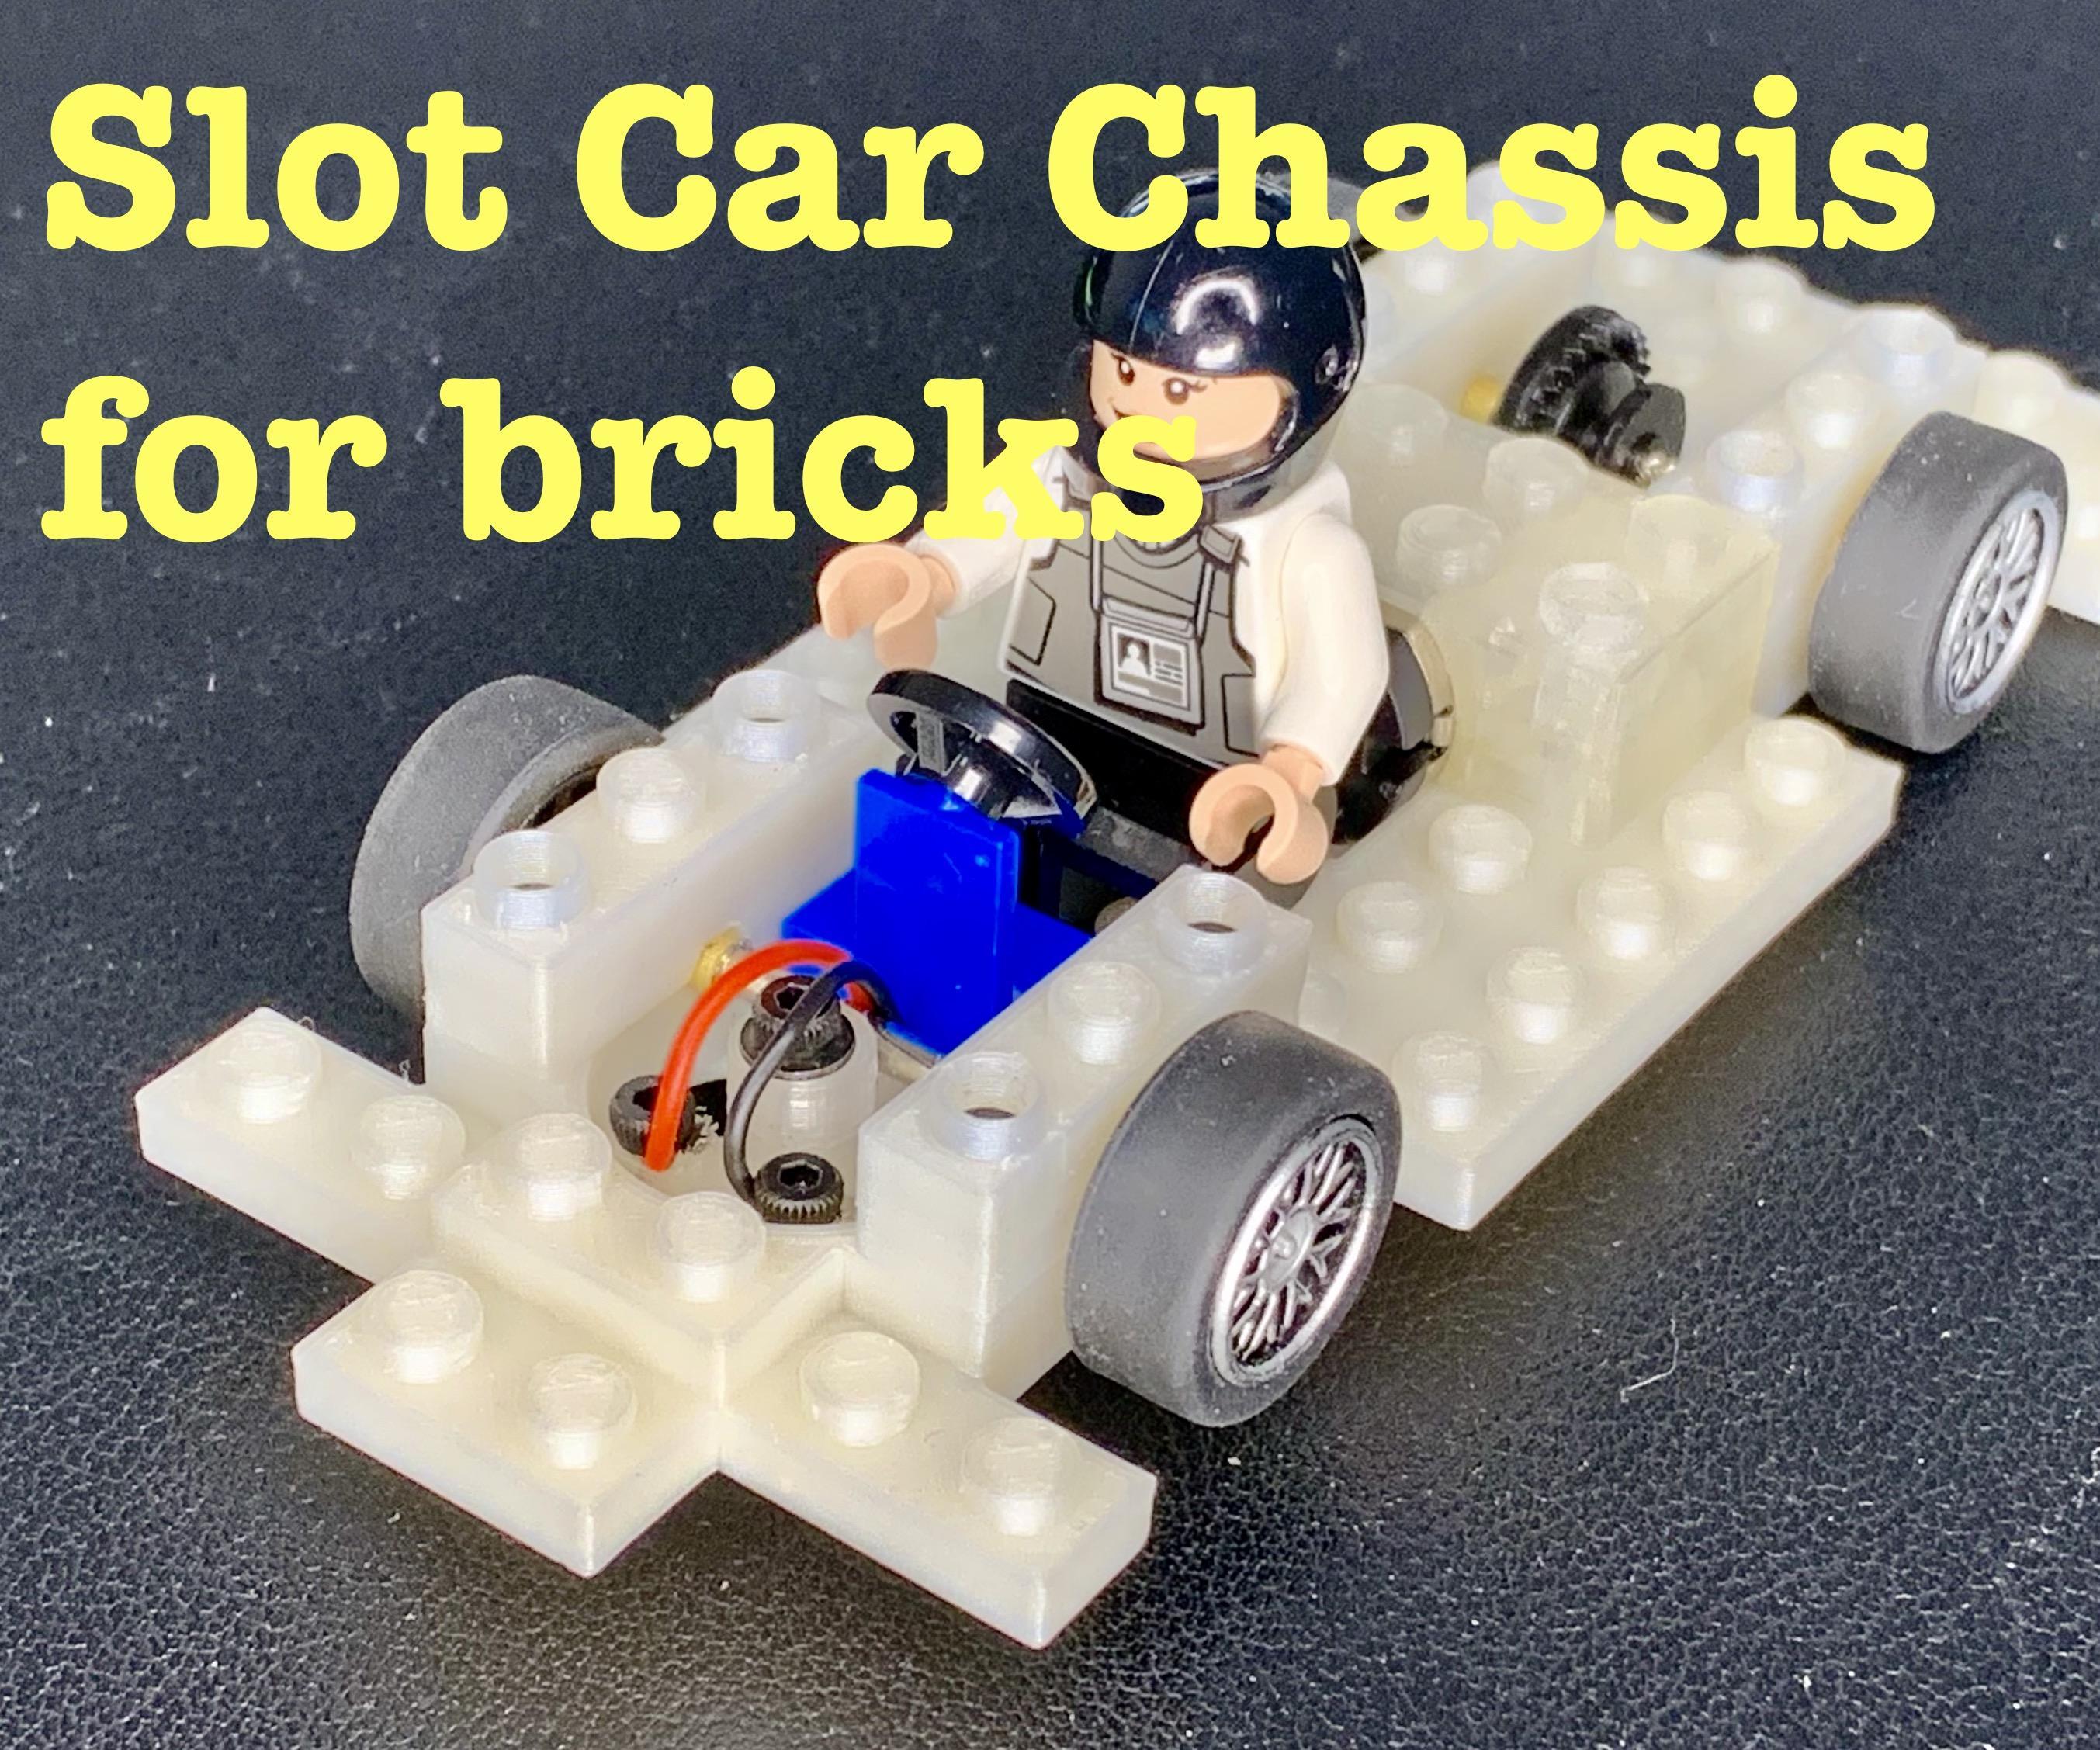 Slot Car Chassis for Bricks